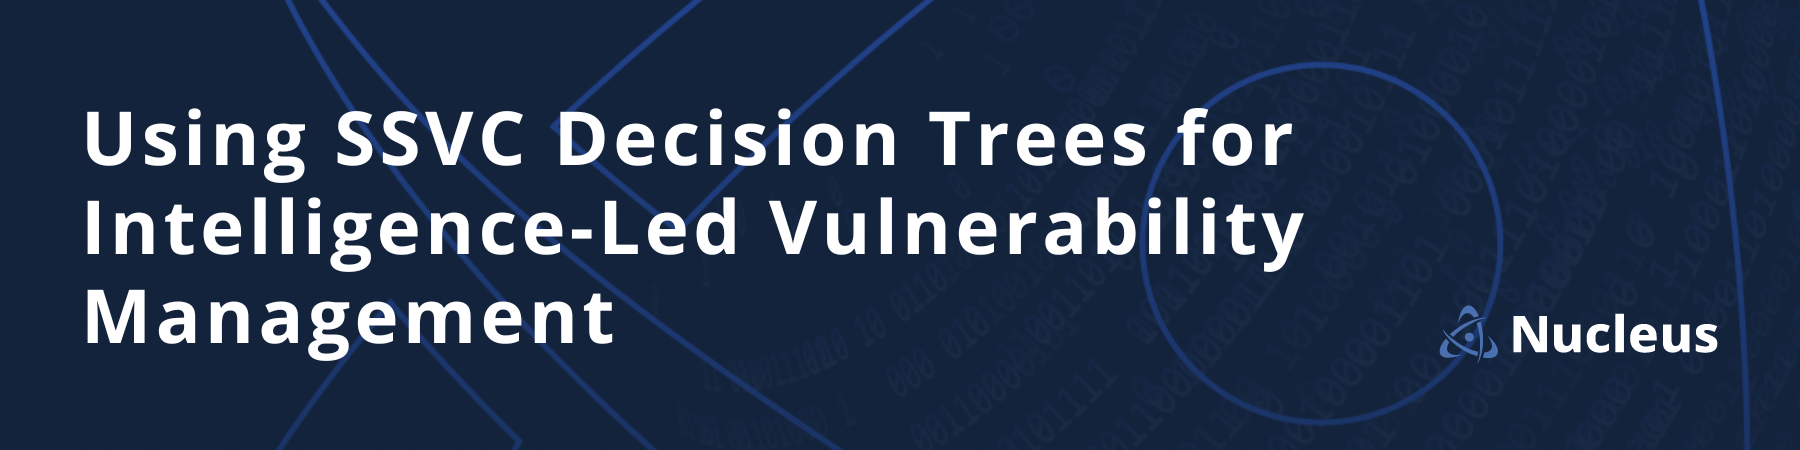 SSVC Decision Trees